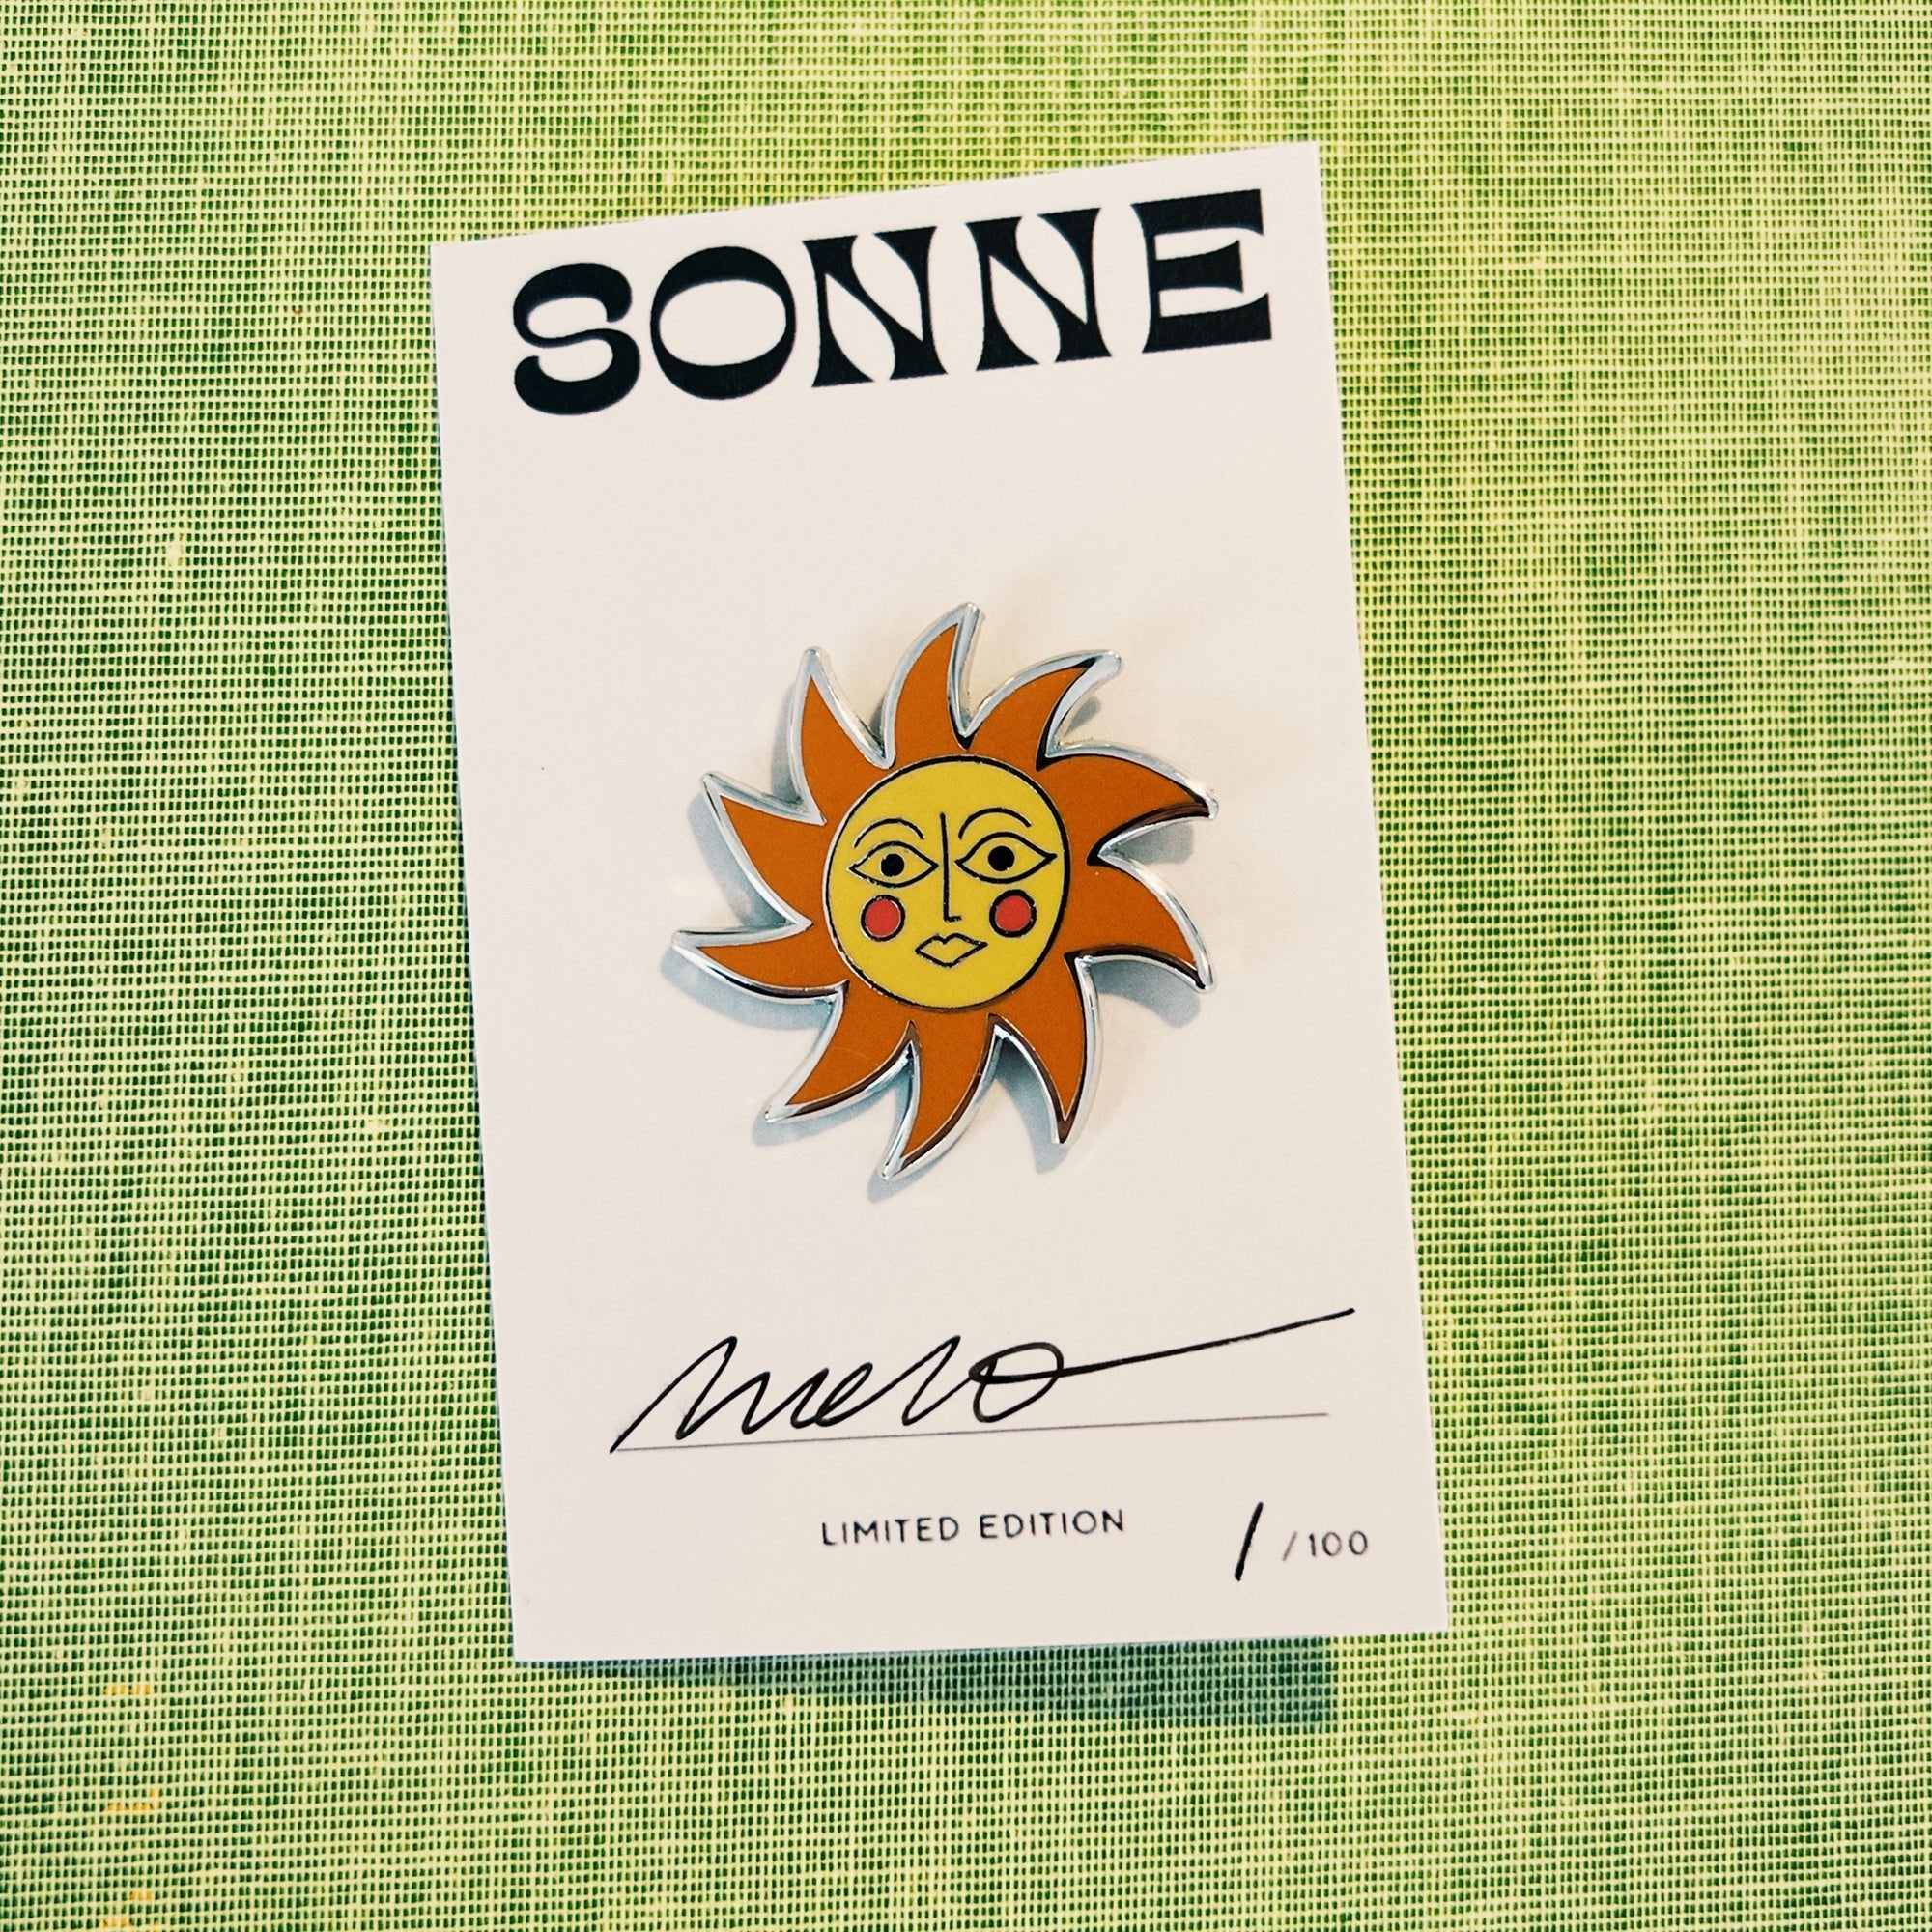 Sonne Limited Edition Pin Badge - Marcello Velho